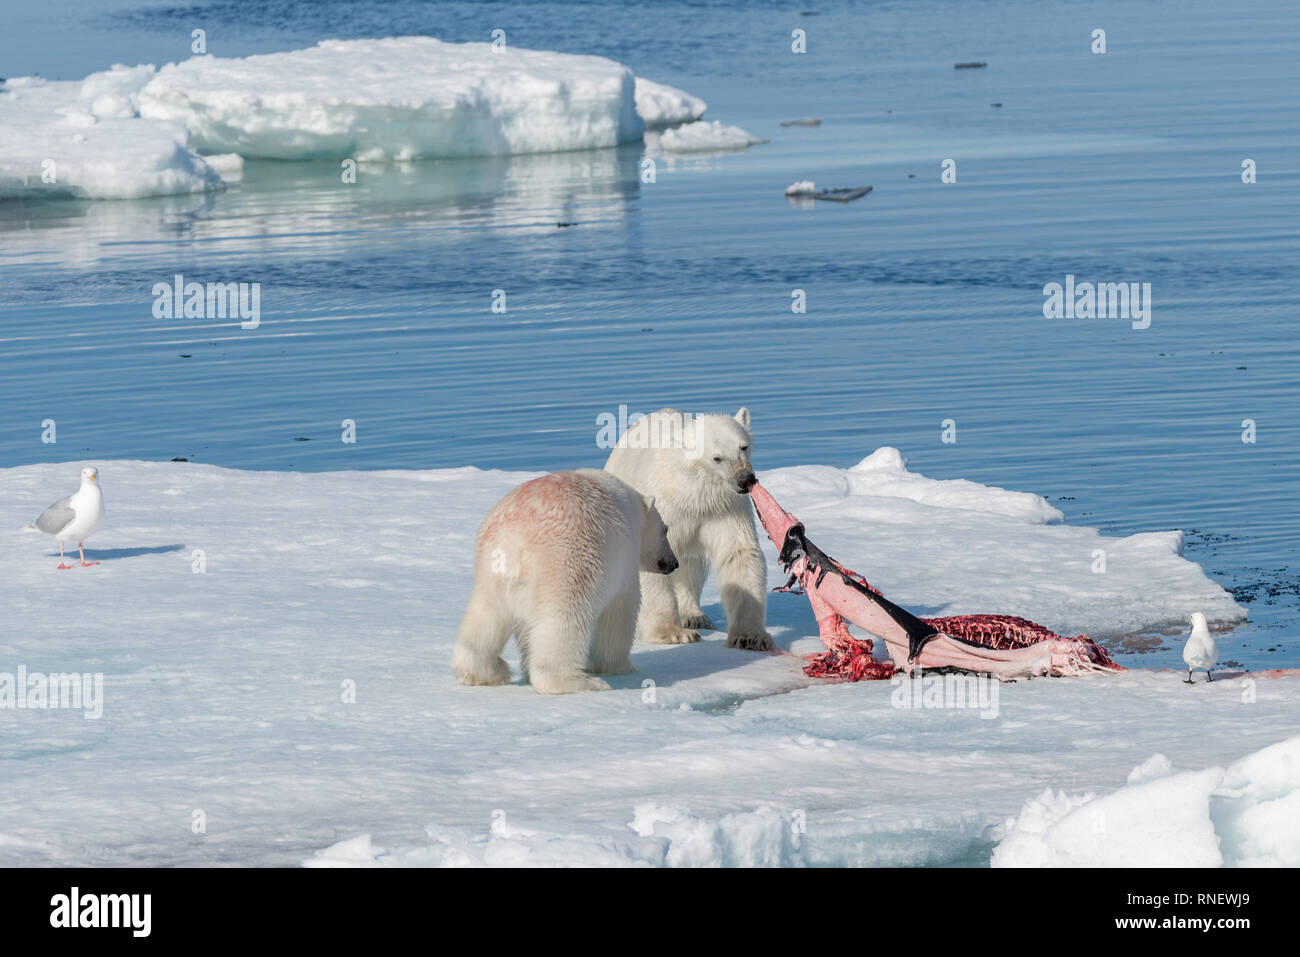 https://c8.alamy.com/comp/RNEWJ9/two-wild-polar-bears-eating-killed-seal-on-the-pack-ice-north-of-spitsbergen-island-svalbard-RNEWJ9.jpg